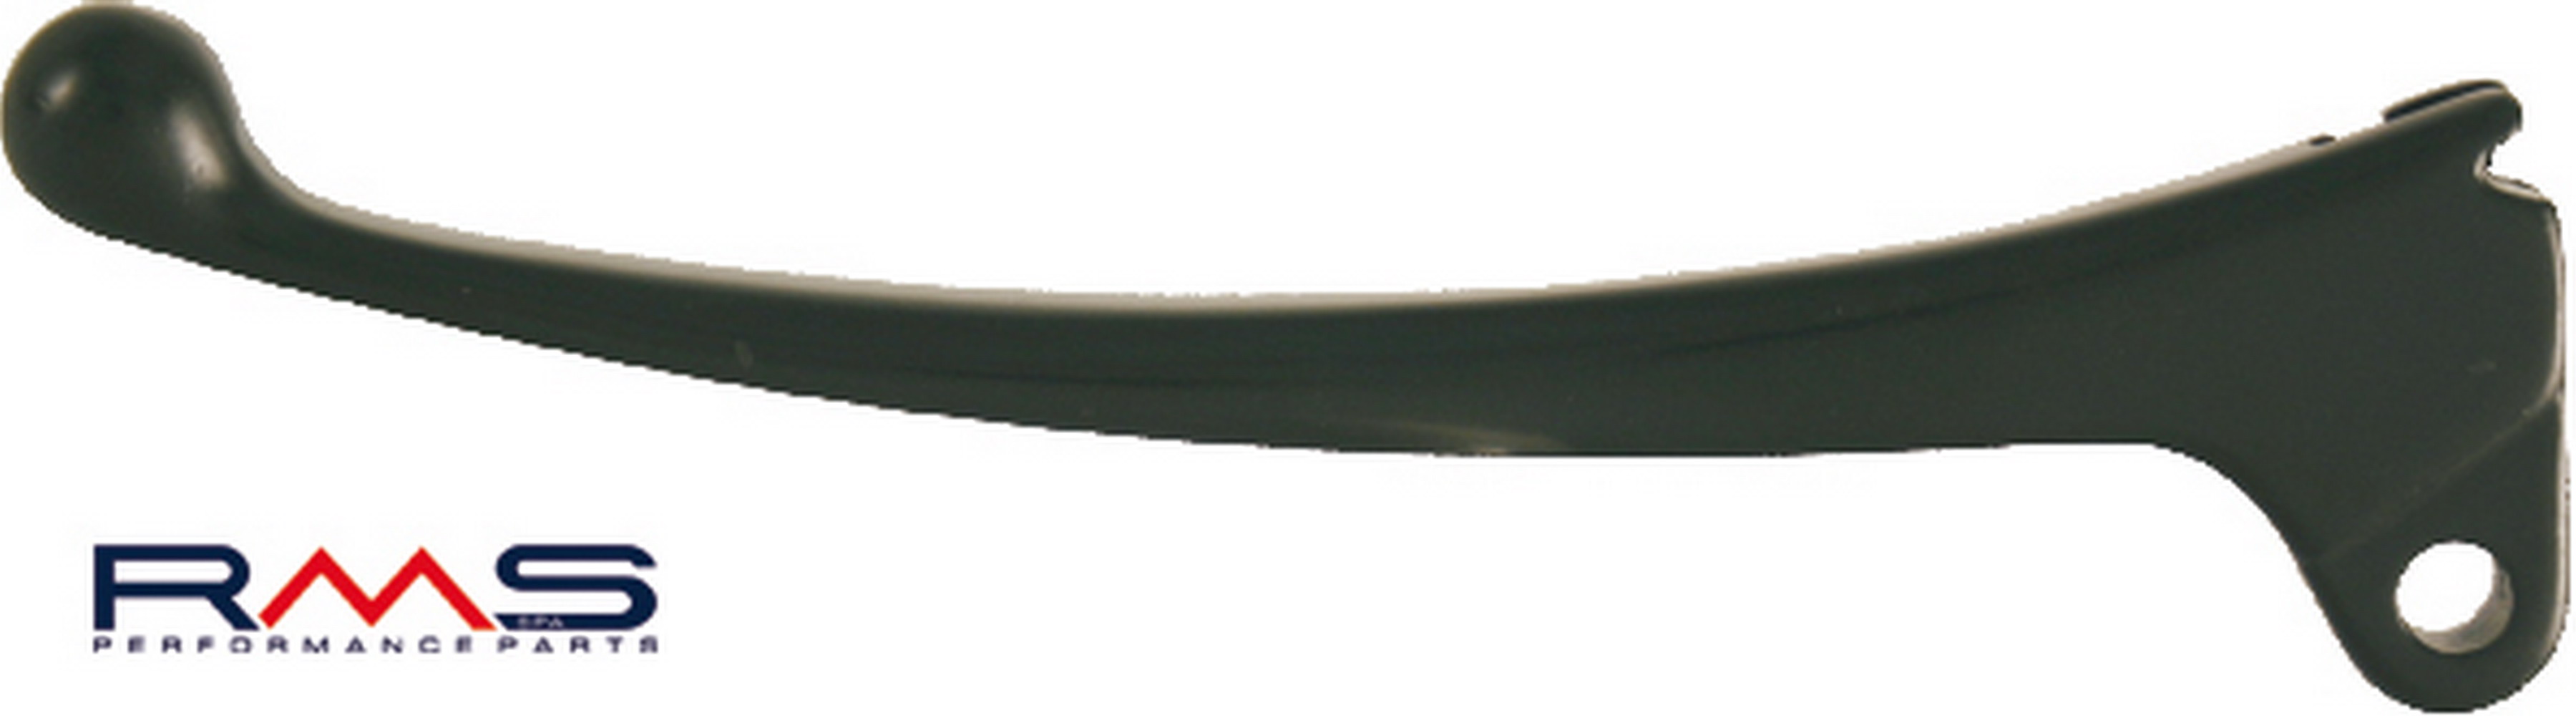 Obrázek produktu Páčka RMS 184100381 levý černý